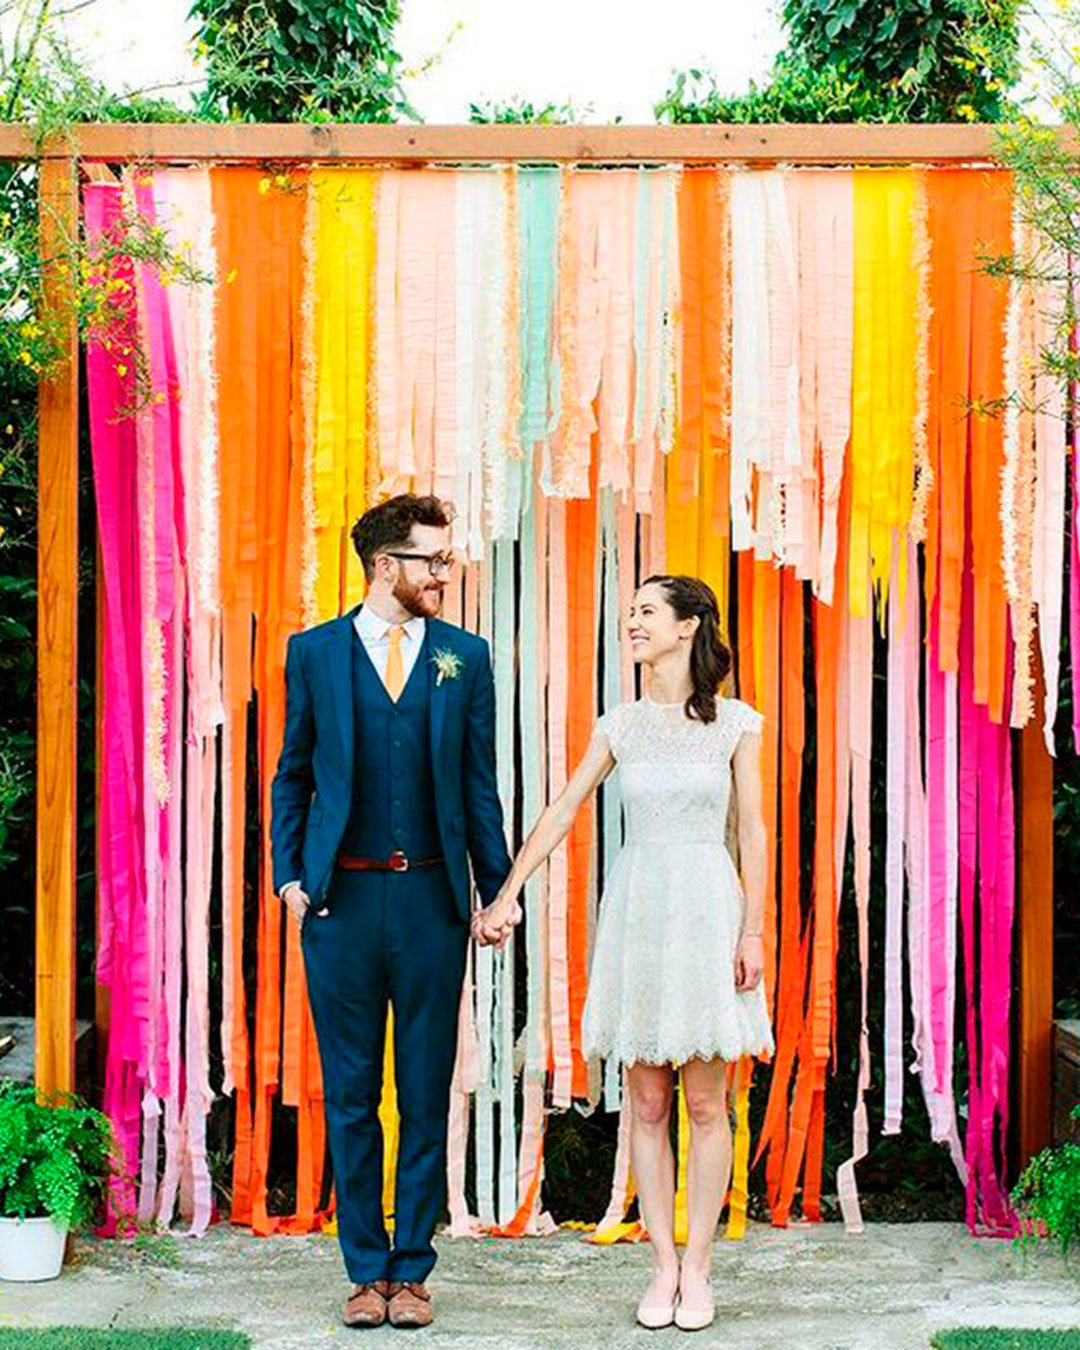 Diy Wedding Ideas 20 Creative Decor